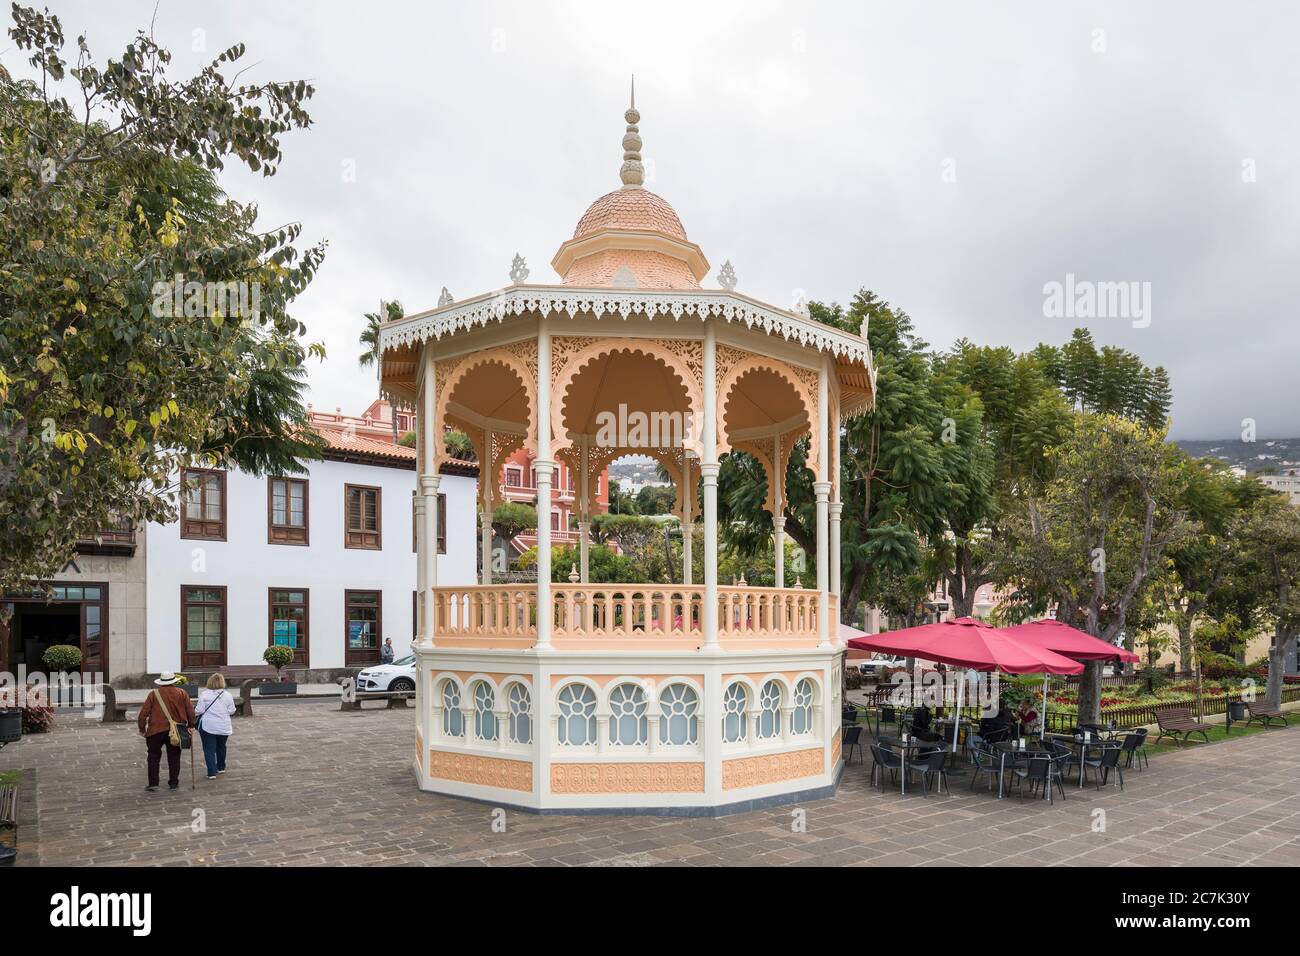 Pavilion on the Plaza de la Constitucion, La Orotava, Tenerife, Canary Islands, Spain Stock Photo